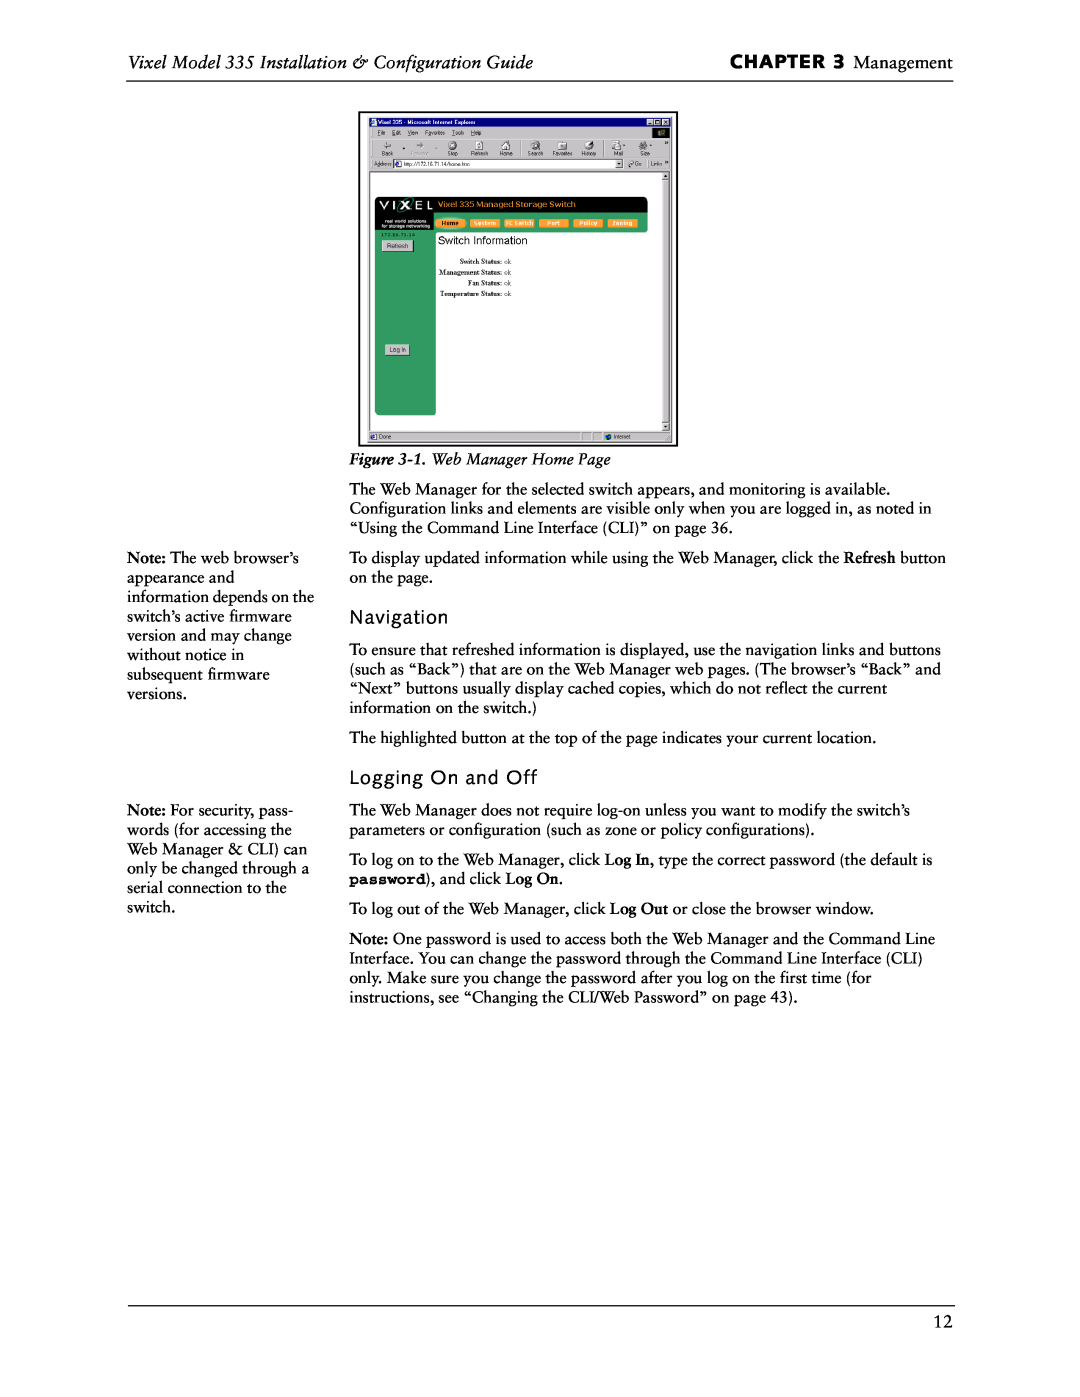 Vixel manual Management, Navigation, Logging On and Off, Vixel Model 335 Installation & Configuration Guide 